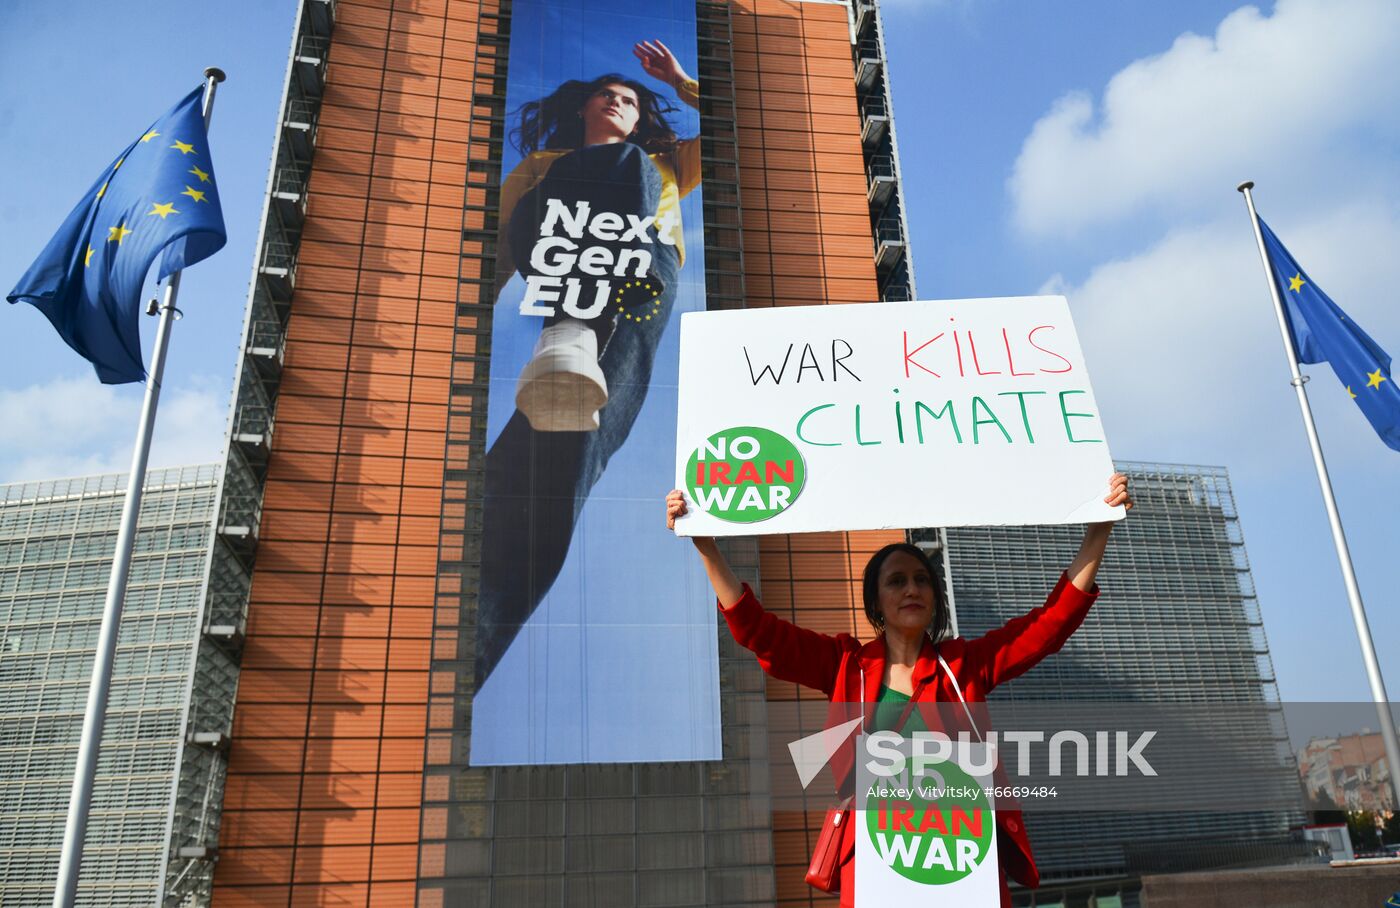 Belgium Environment Rally